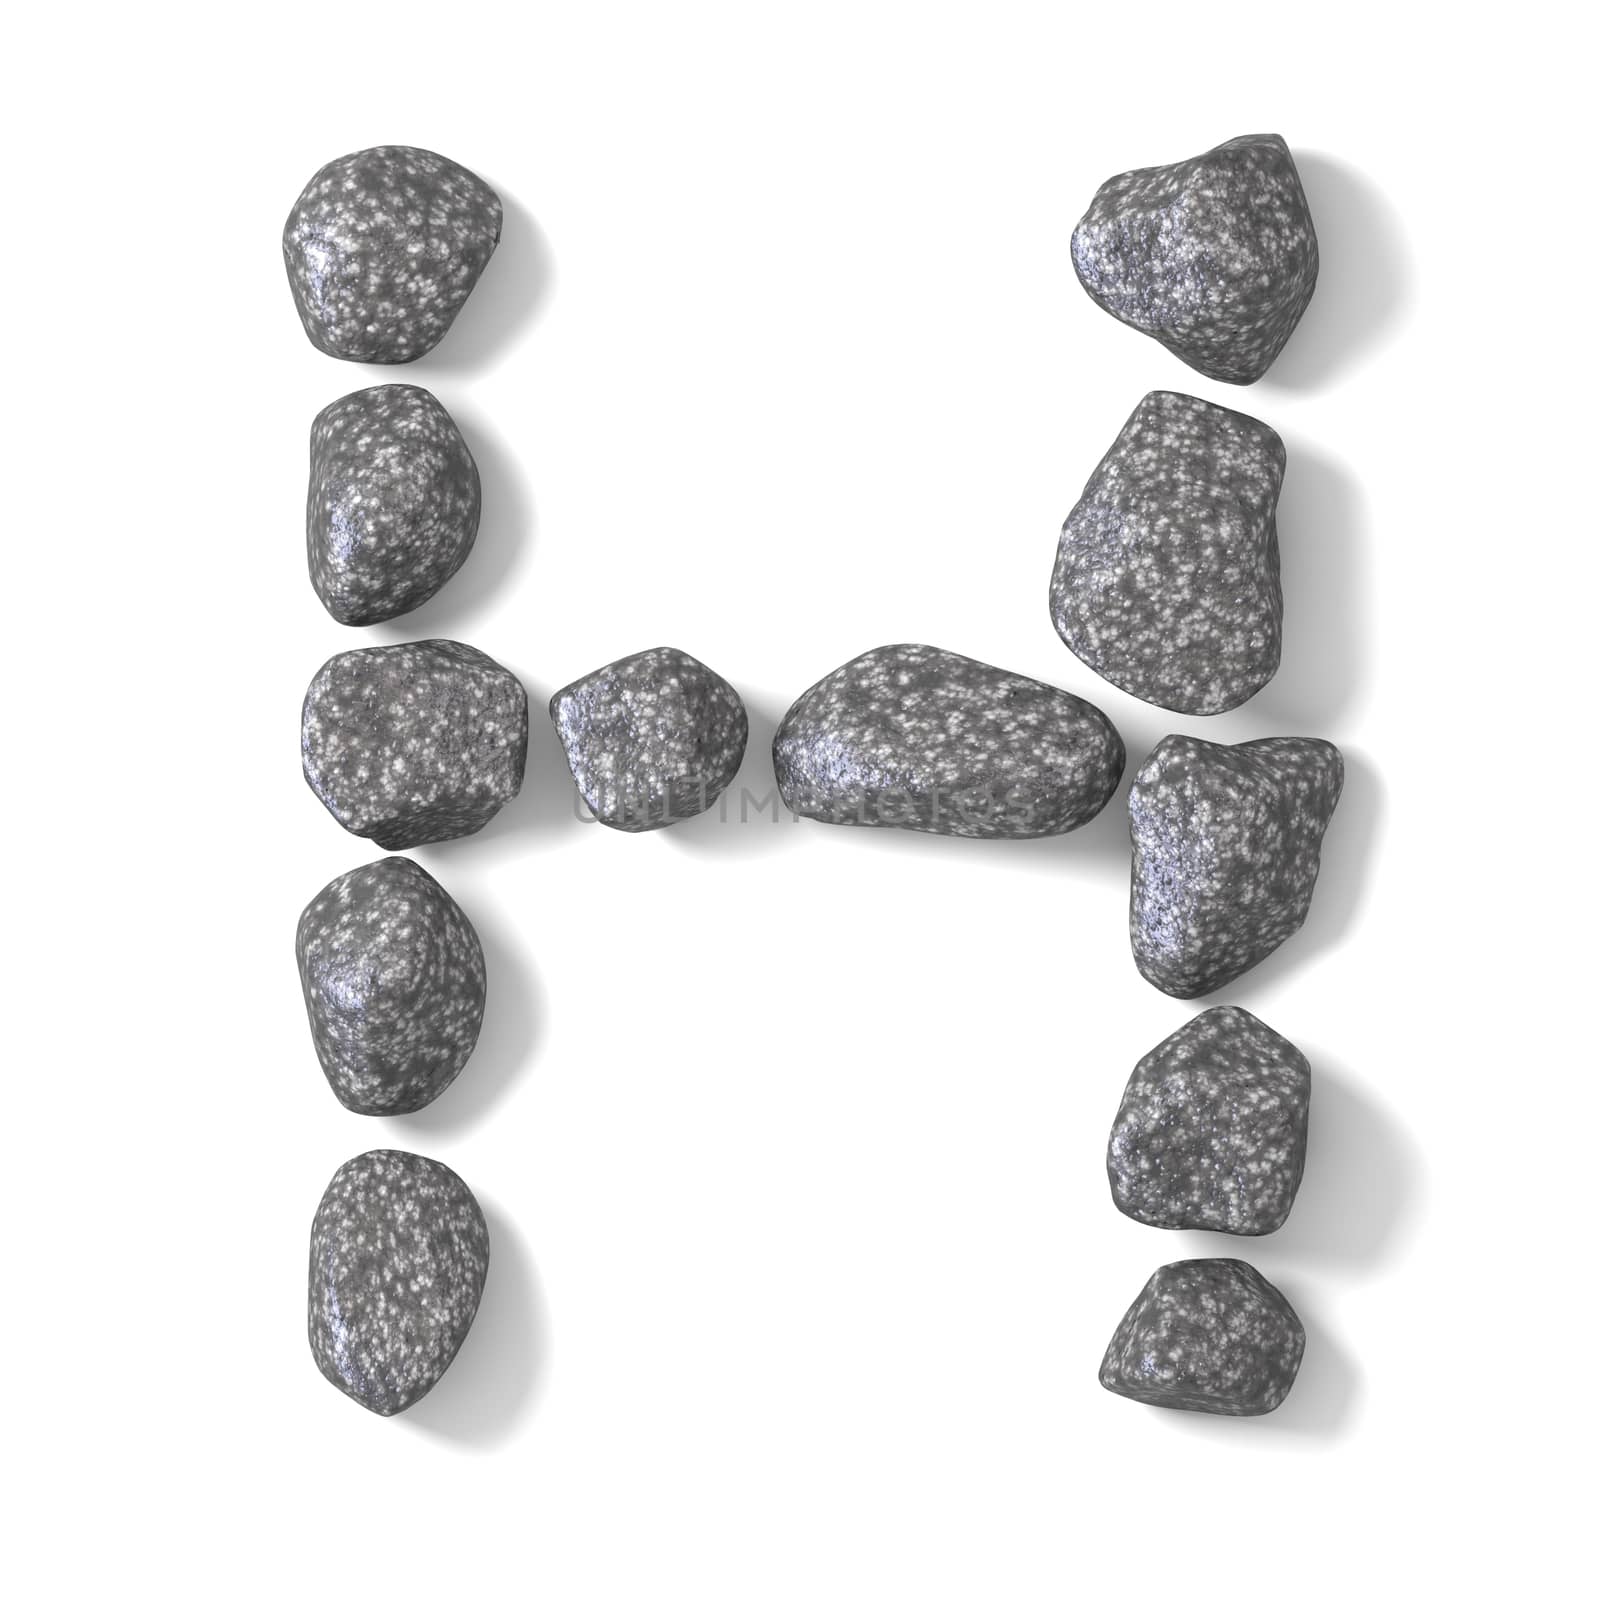 Font made of rocks LETTER H 3D render illustration isolated on white background